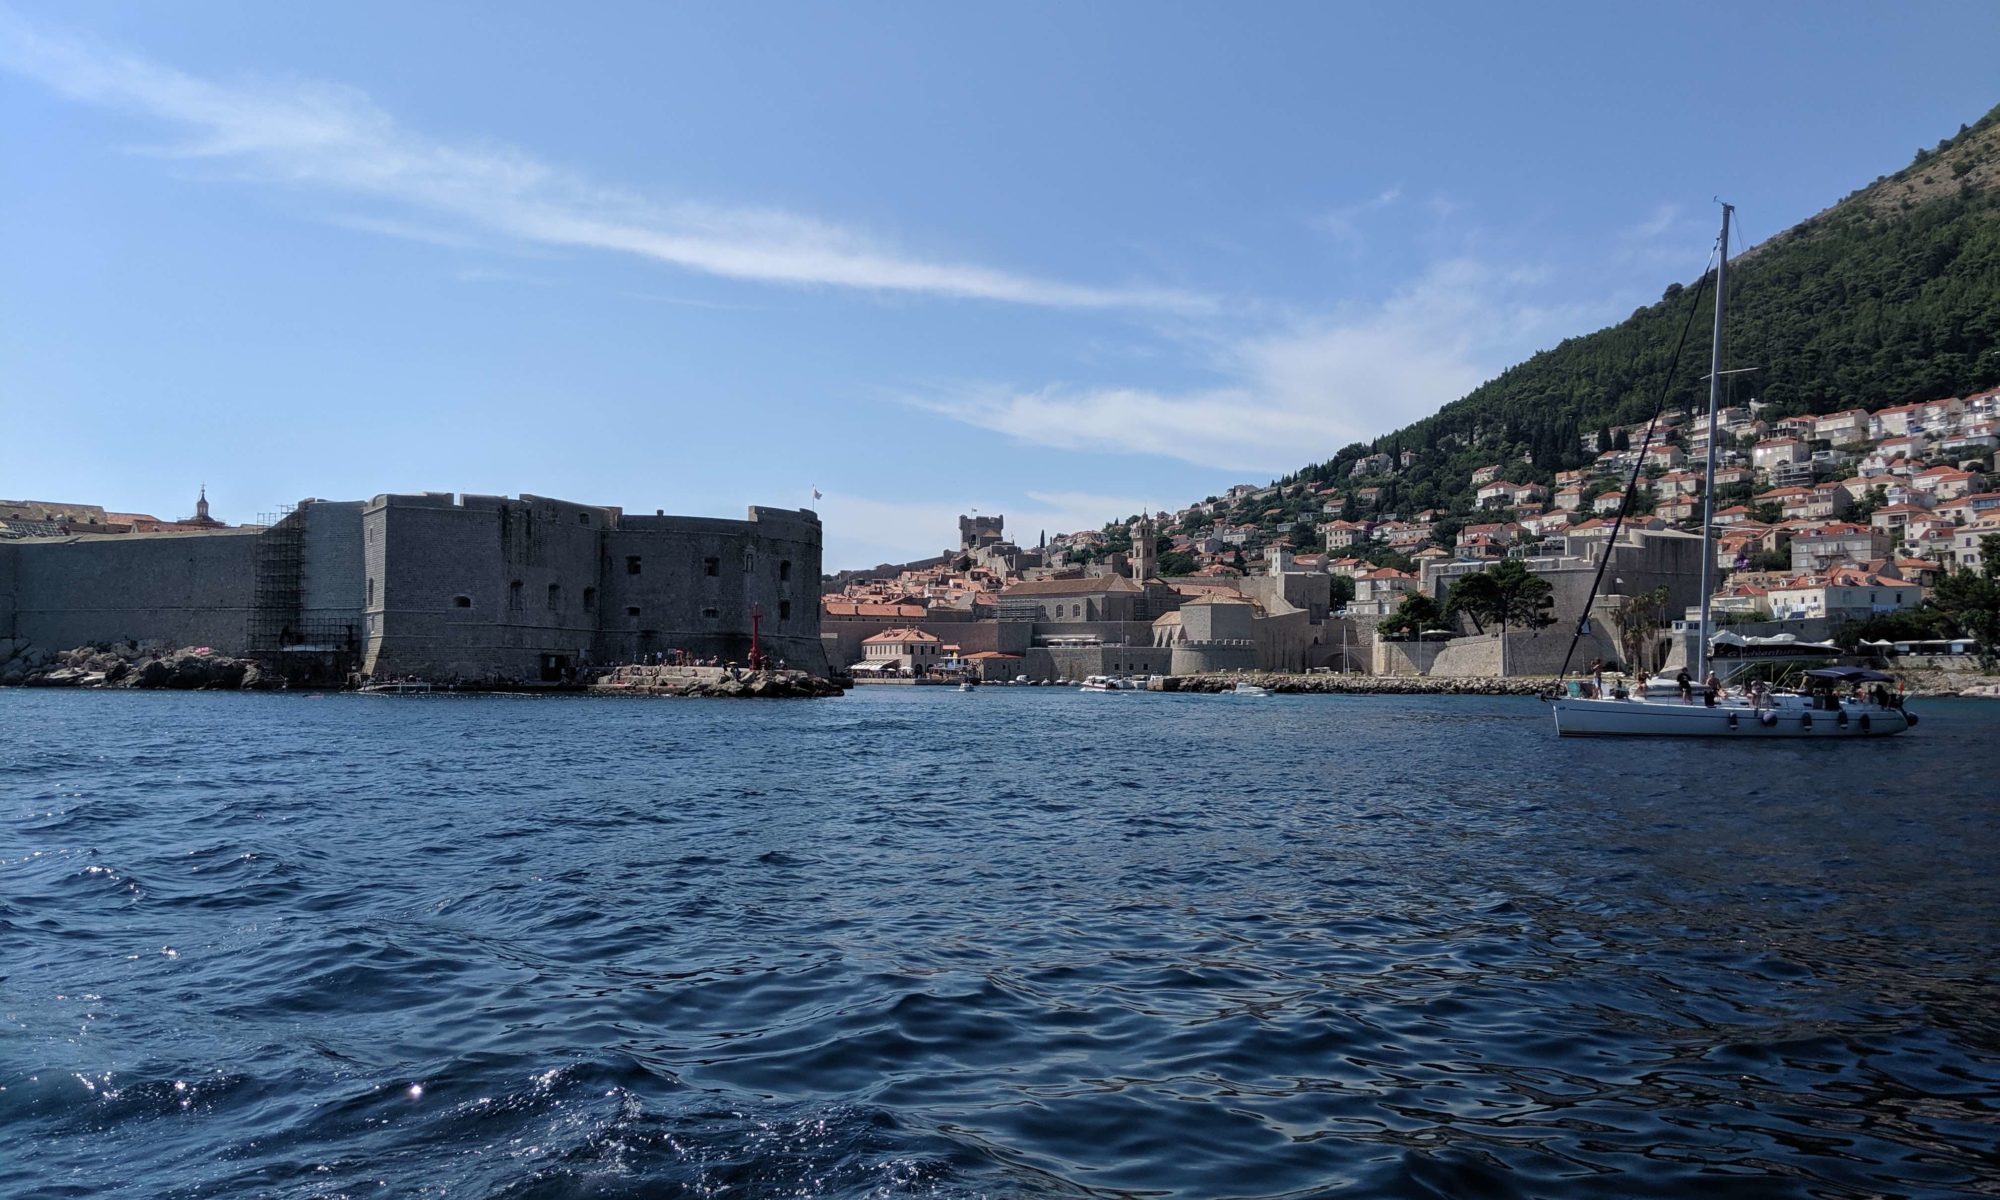 Dubrovnik Harbor as seen from Sea Rose as we motor past